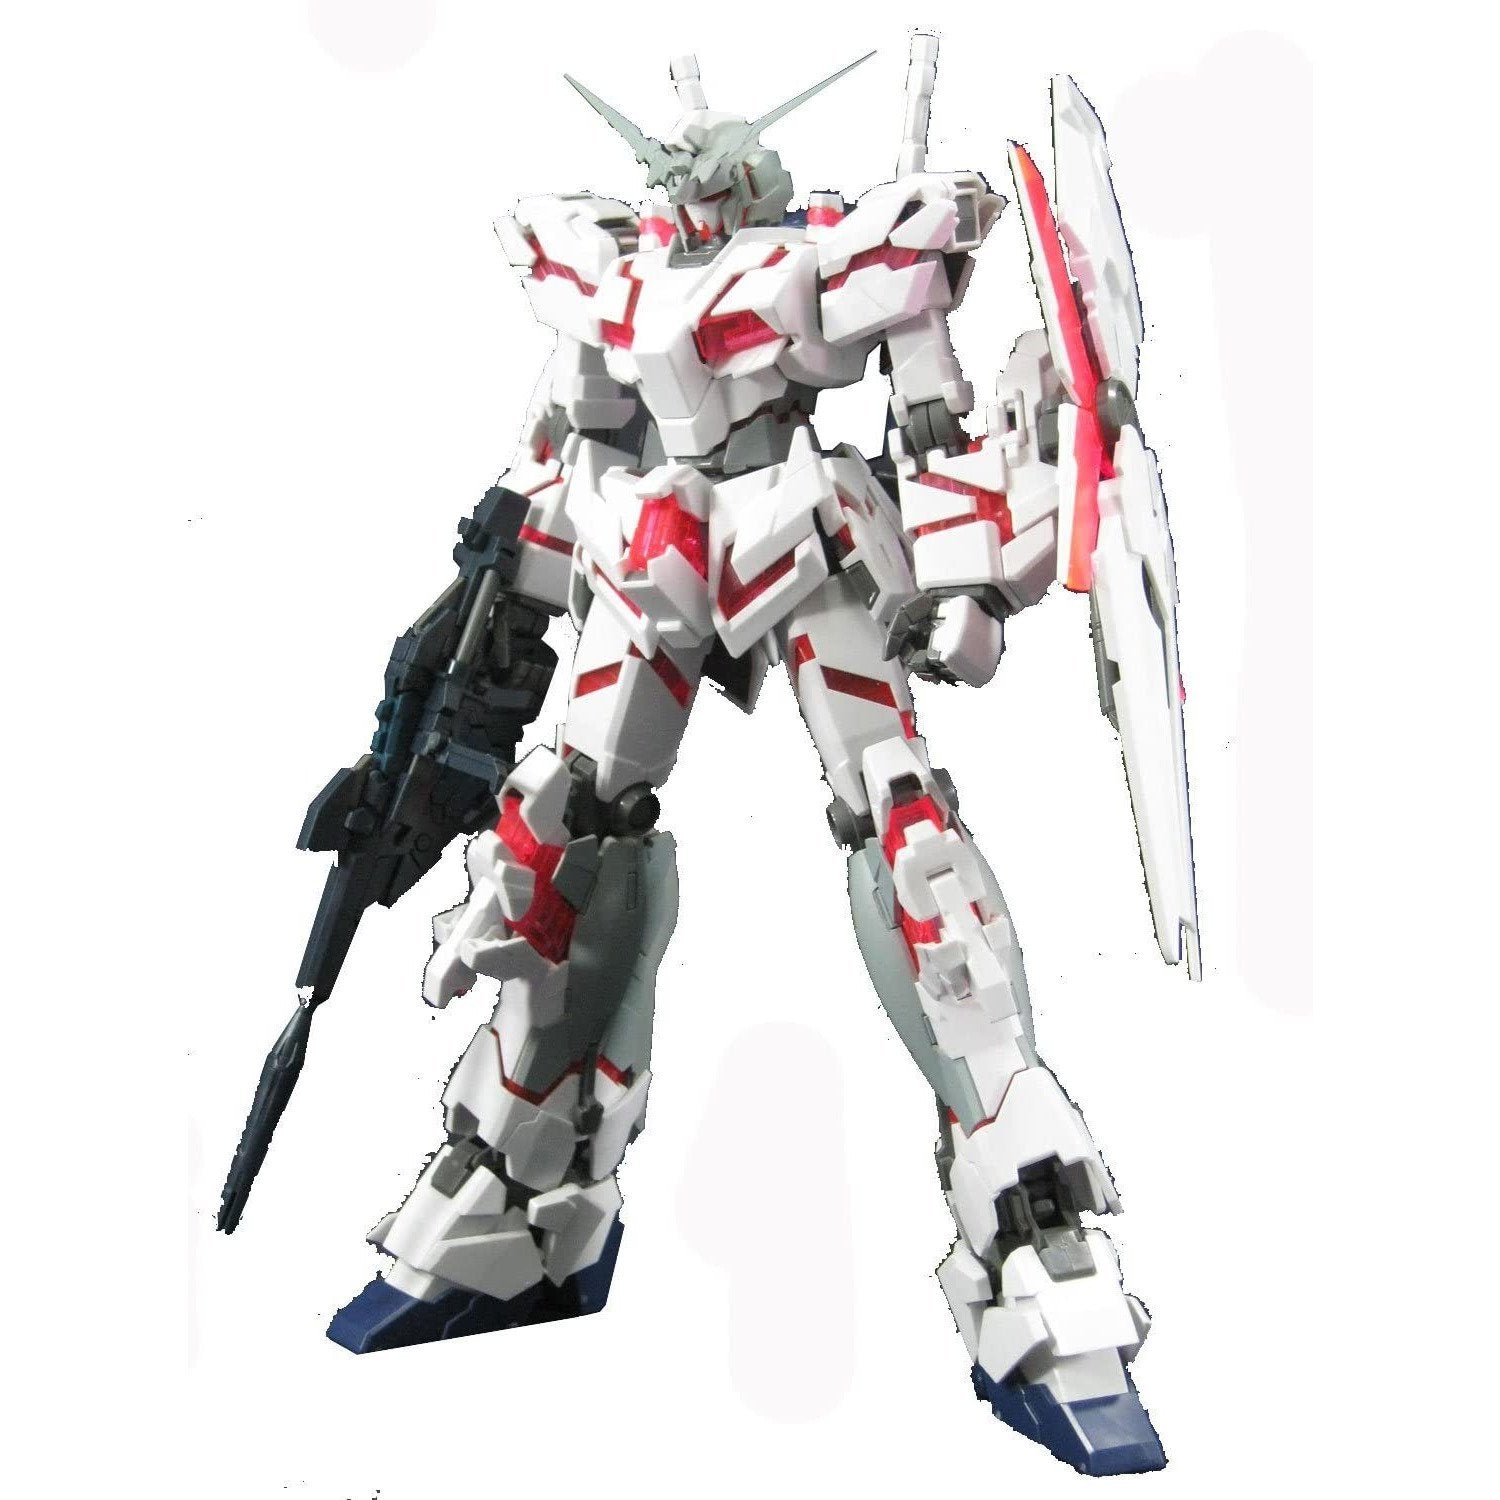 Gunpla MG 1/100 Unicorn Gundam (HD Color + MS Cage)-Bandai-Ace Cards & Collectibles